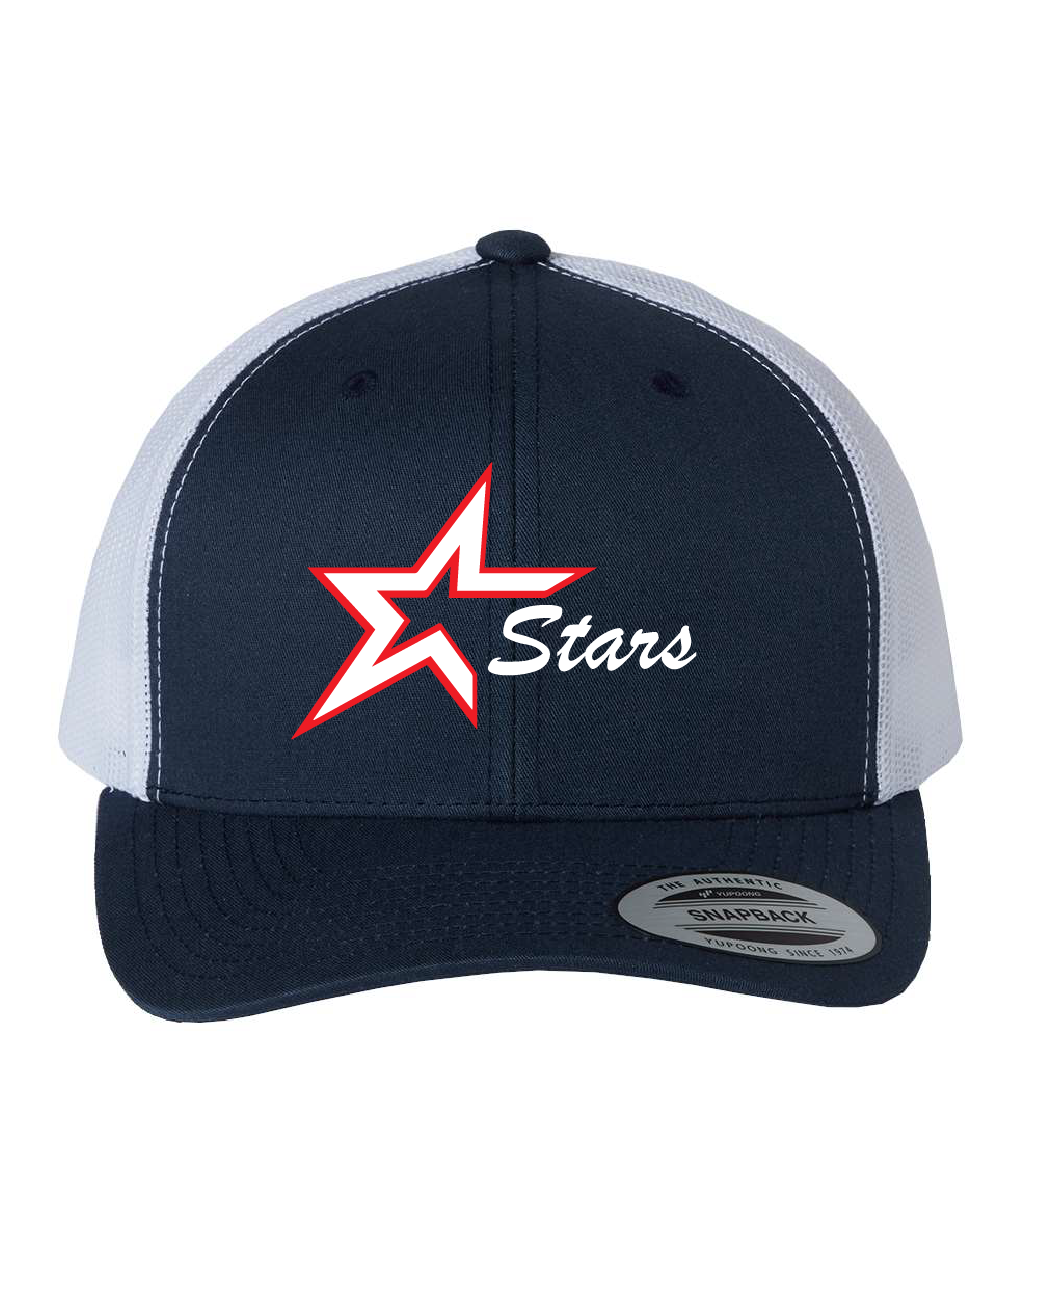 Stars Adjustable Trucker Hat